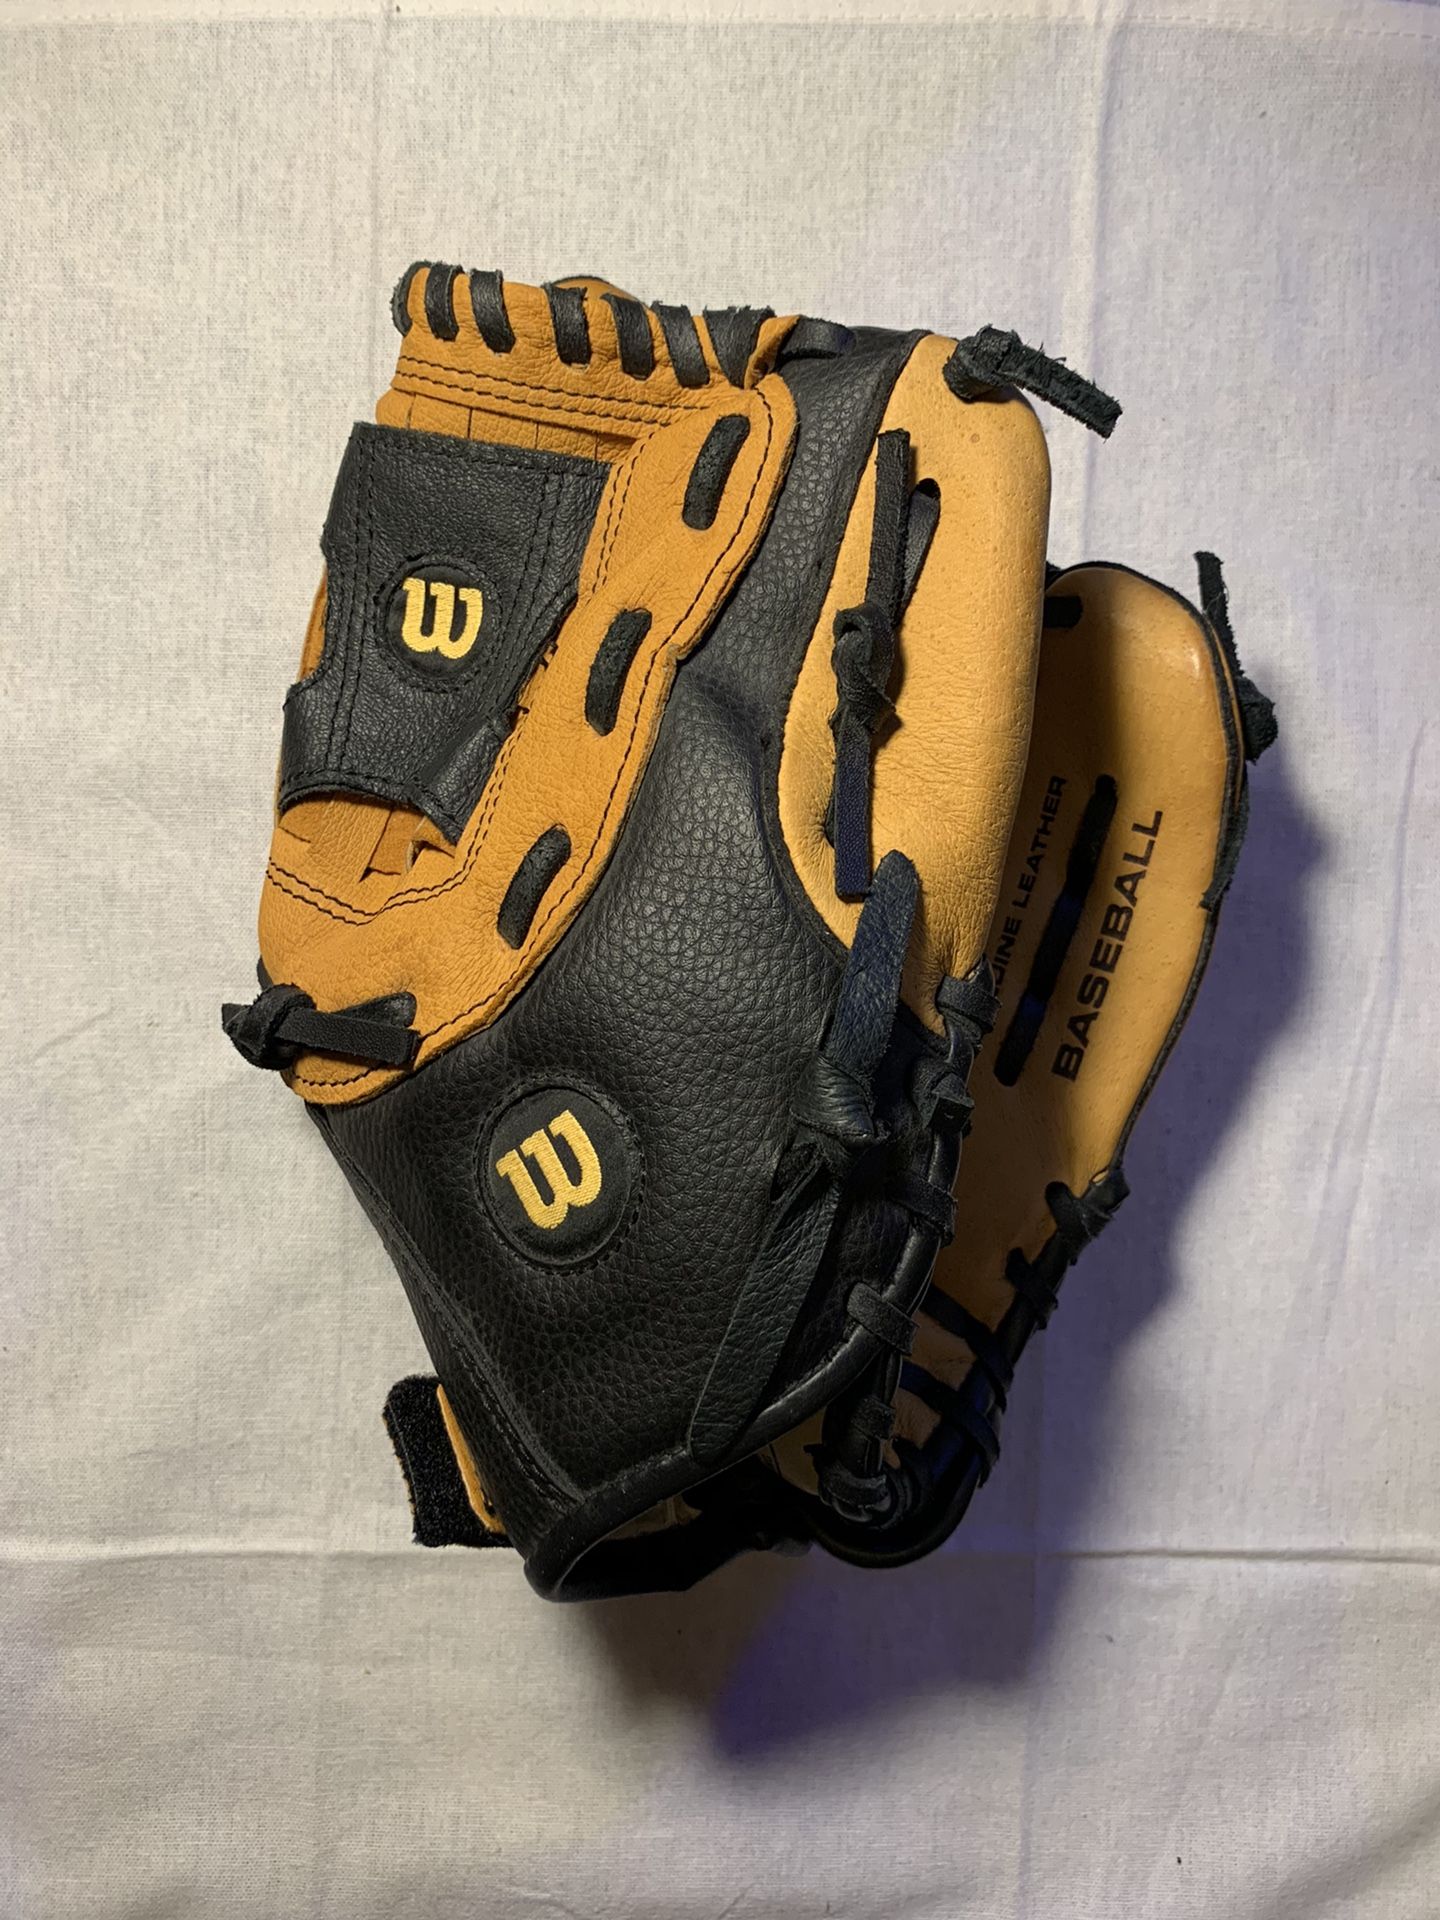 Wilson 11" Youth Baseball Glove - model A2451 Genuine Leather